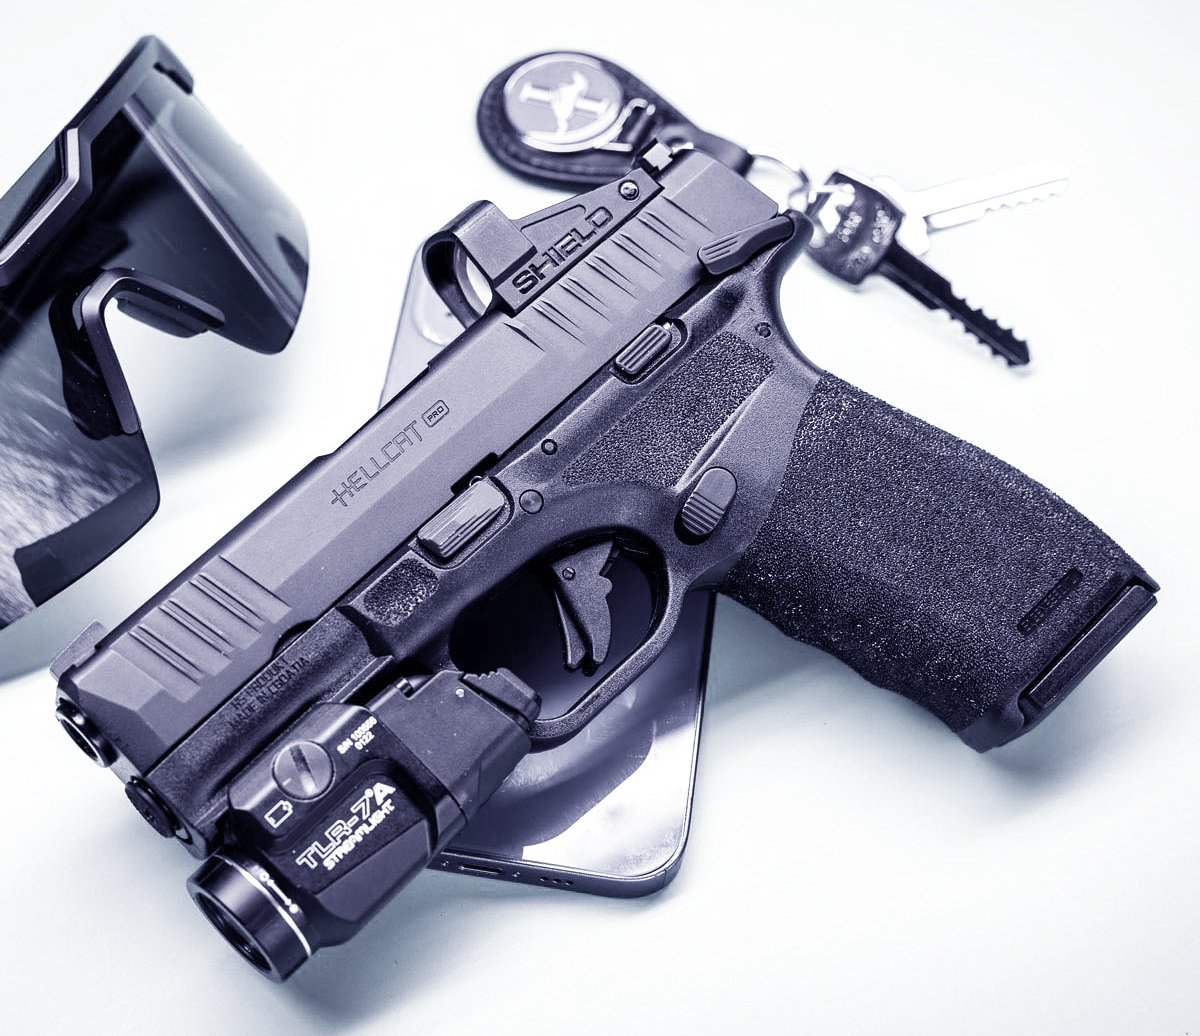 Springfield Hellcat RDP 9mm micro compact pistol